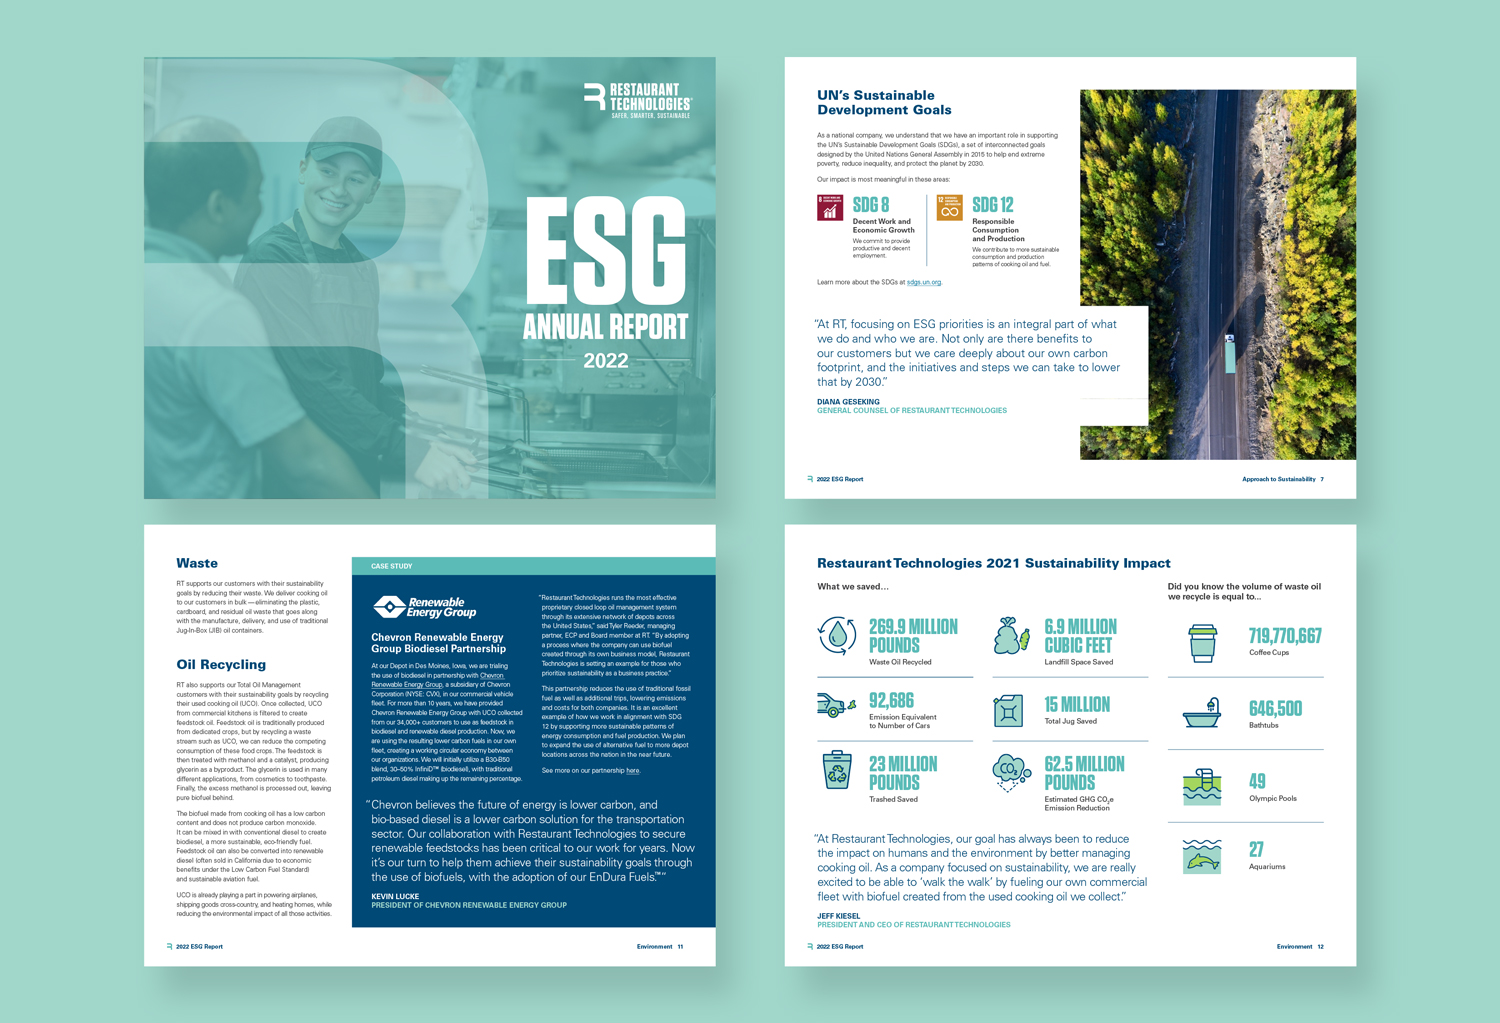 ESG Report Summary